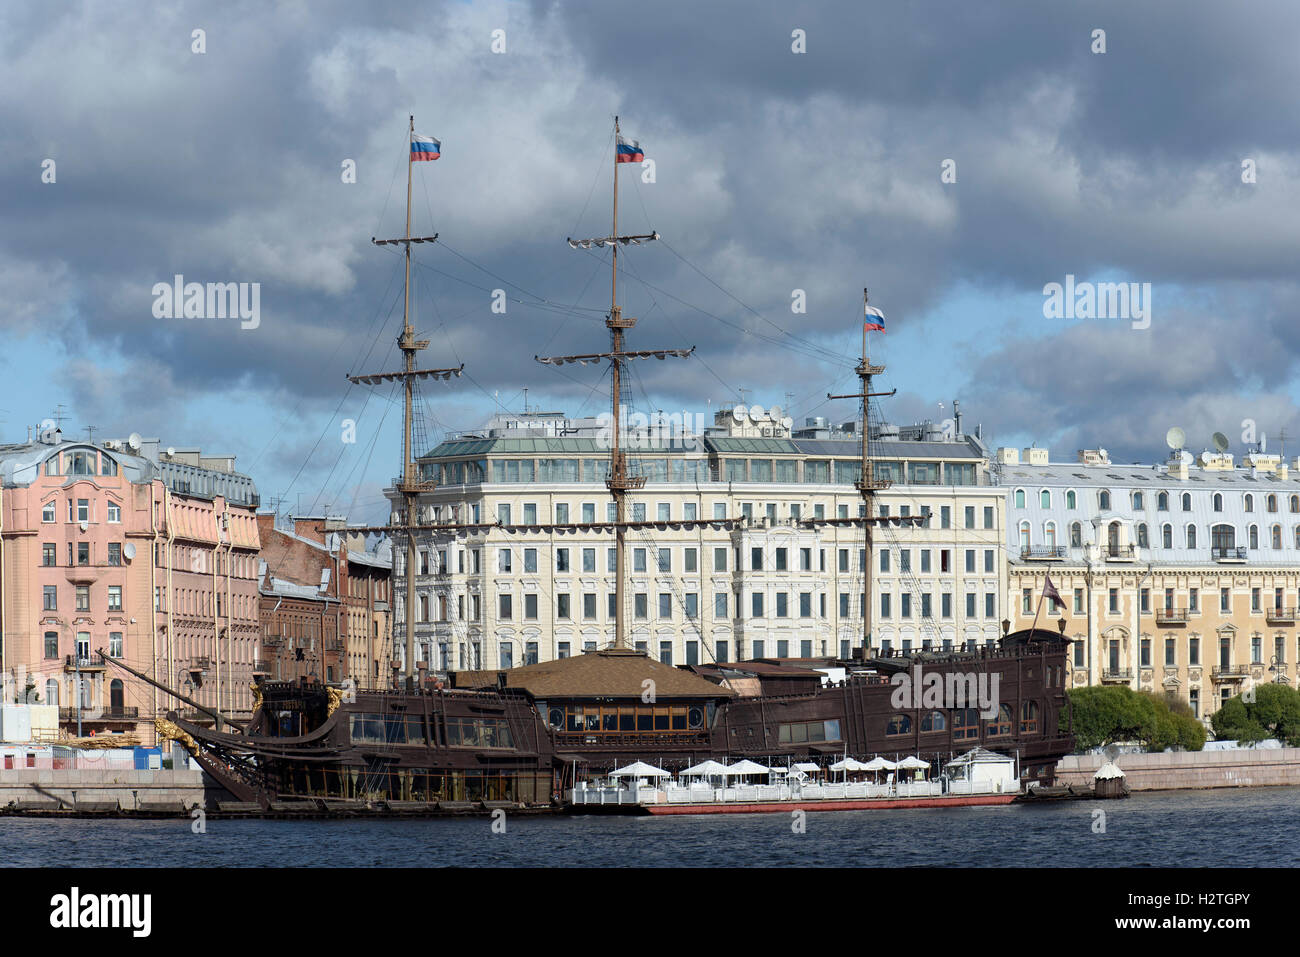 Restaurant ship Flying Dutchman, St. Petersburg, Russia Stock Photo